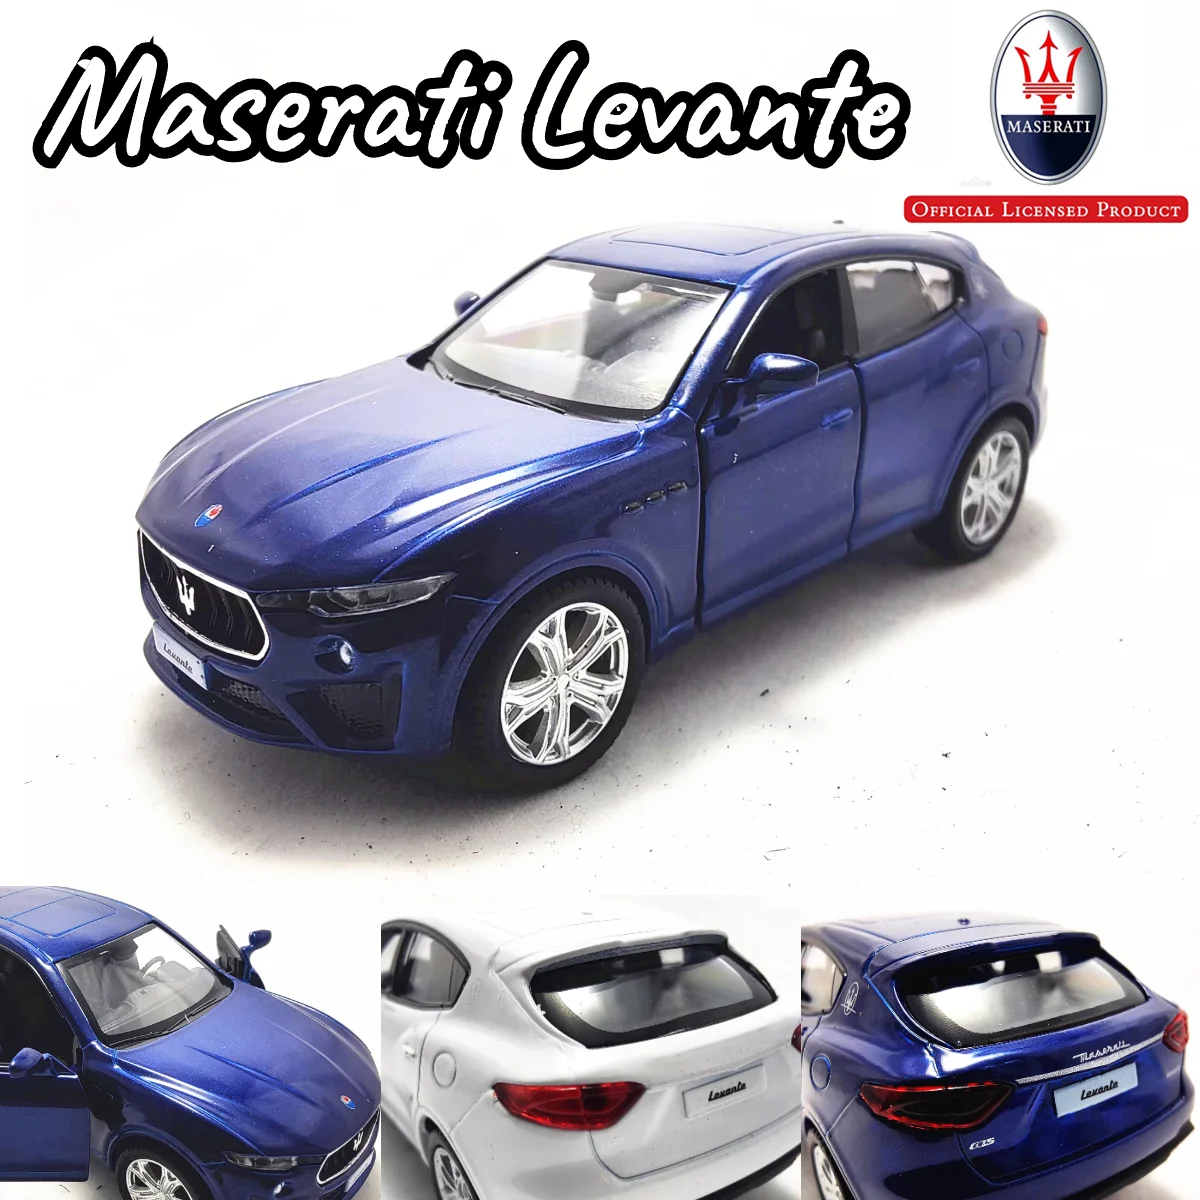 

1:36 Scale Maserati Levante GT Car Model Replica Diecast Vehicle Miniature Home Office Interior Decor Xmas Gift Kid Boy Toy